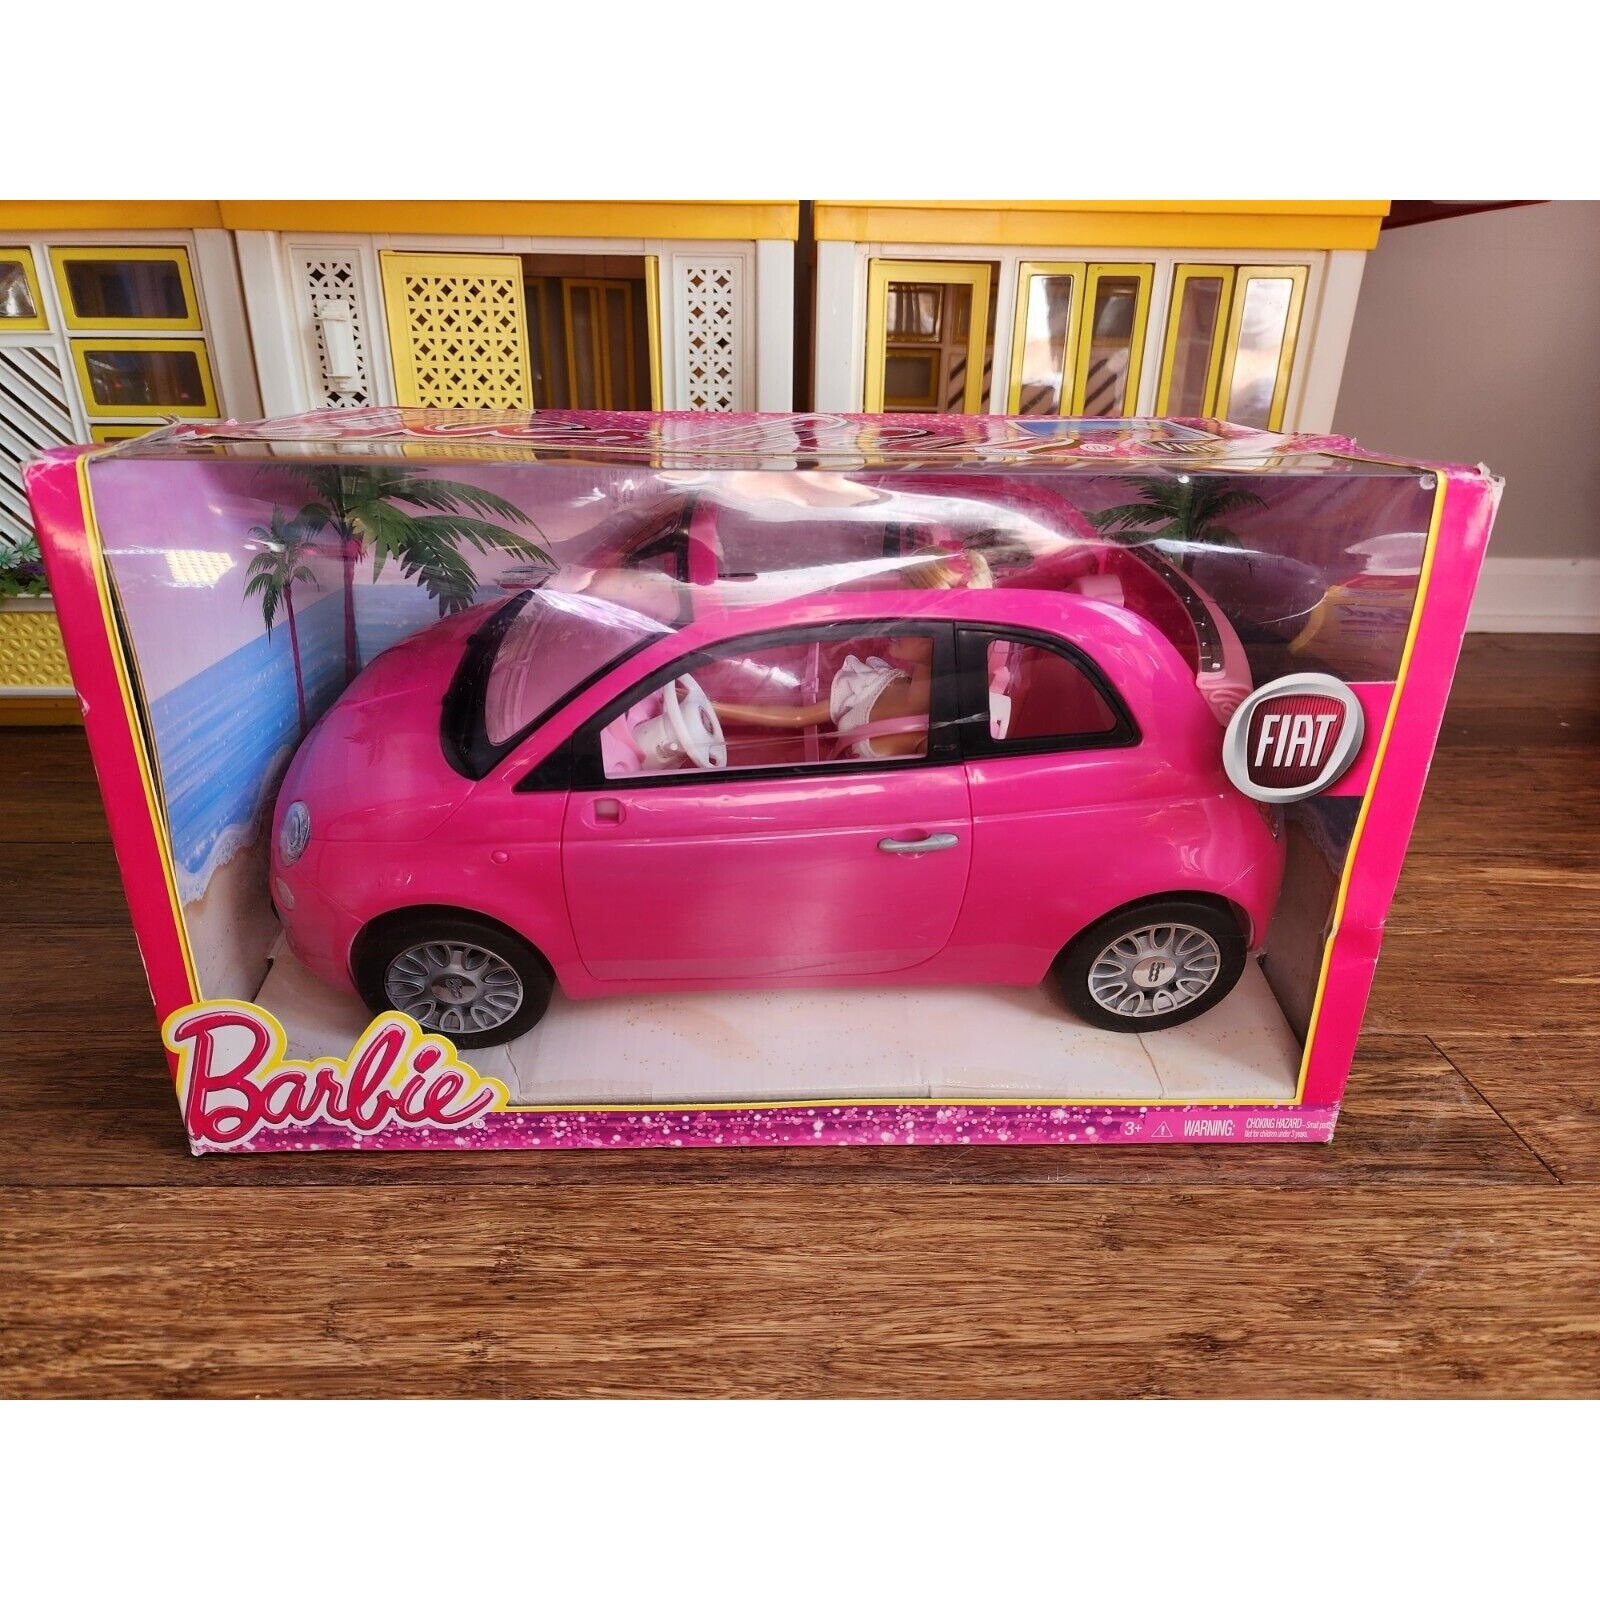 Fiat 500 Car NEW Y6857 Pink Convertible Beach Car -